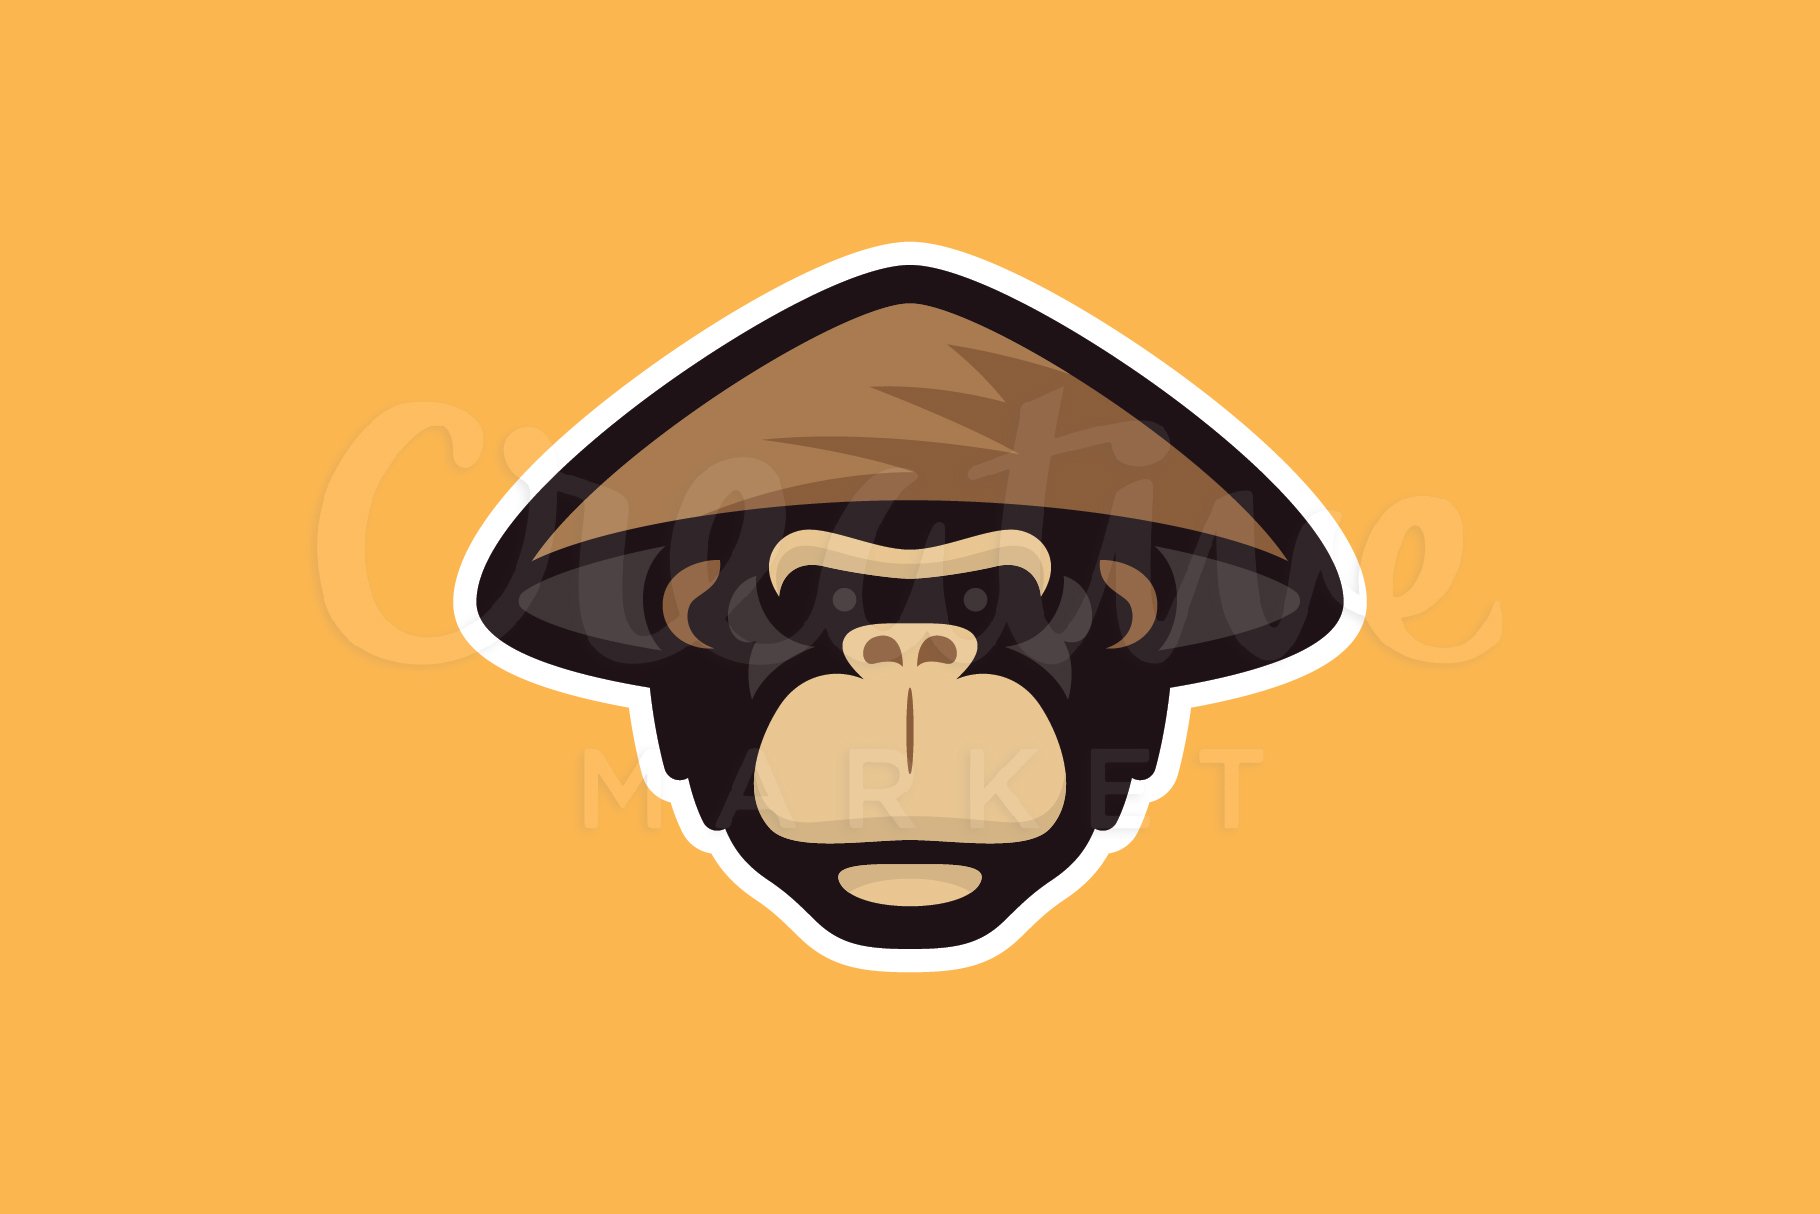 King Kong Farm Logo cover image.